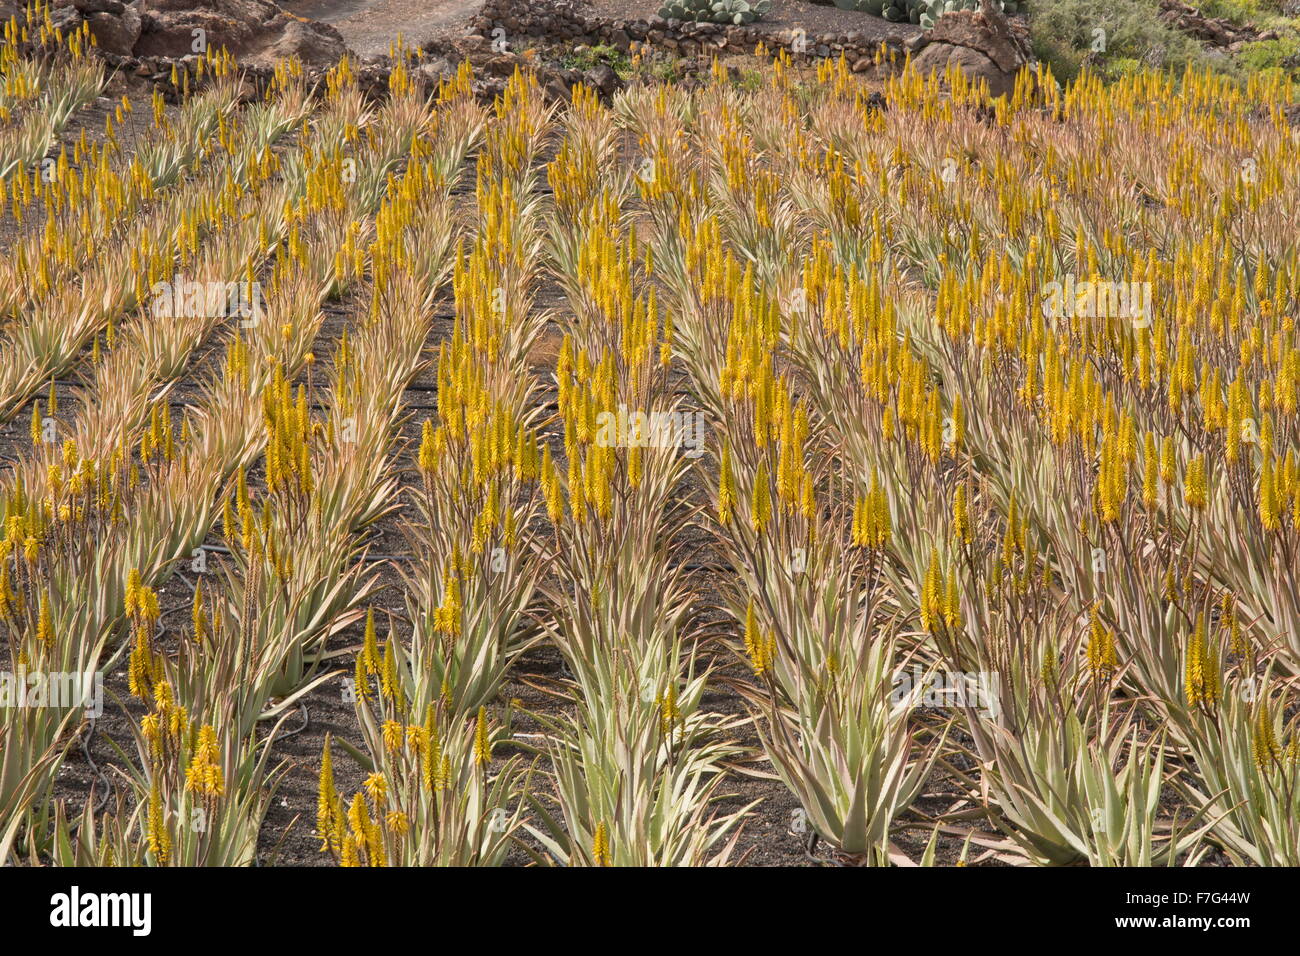 True Aloe, Aloe vera or Aloe barbadensis, in cultivation on cinder at farm near Orzola, Lanzarote. Stock Photo